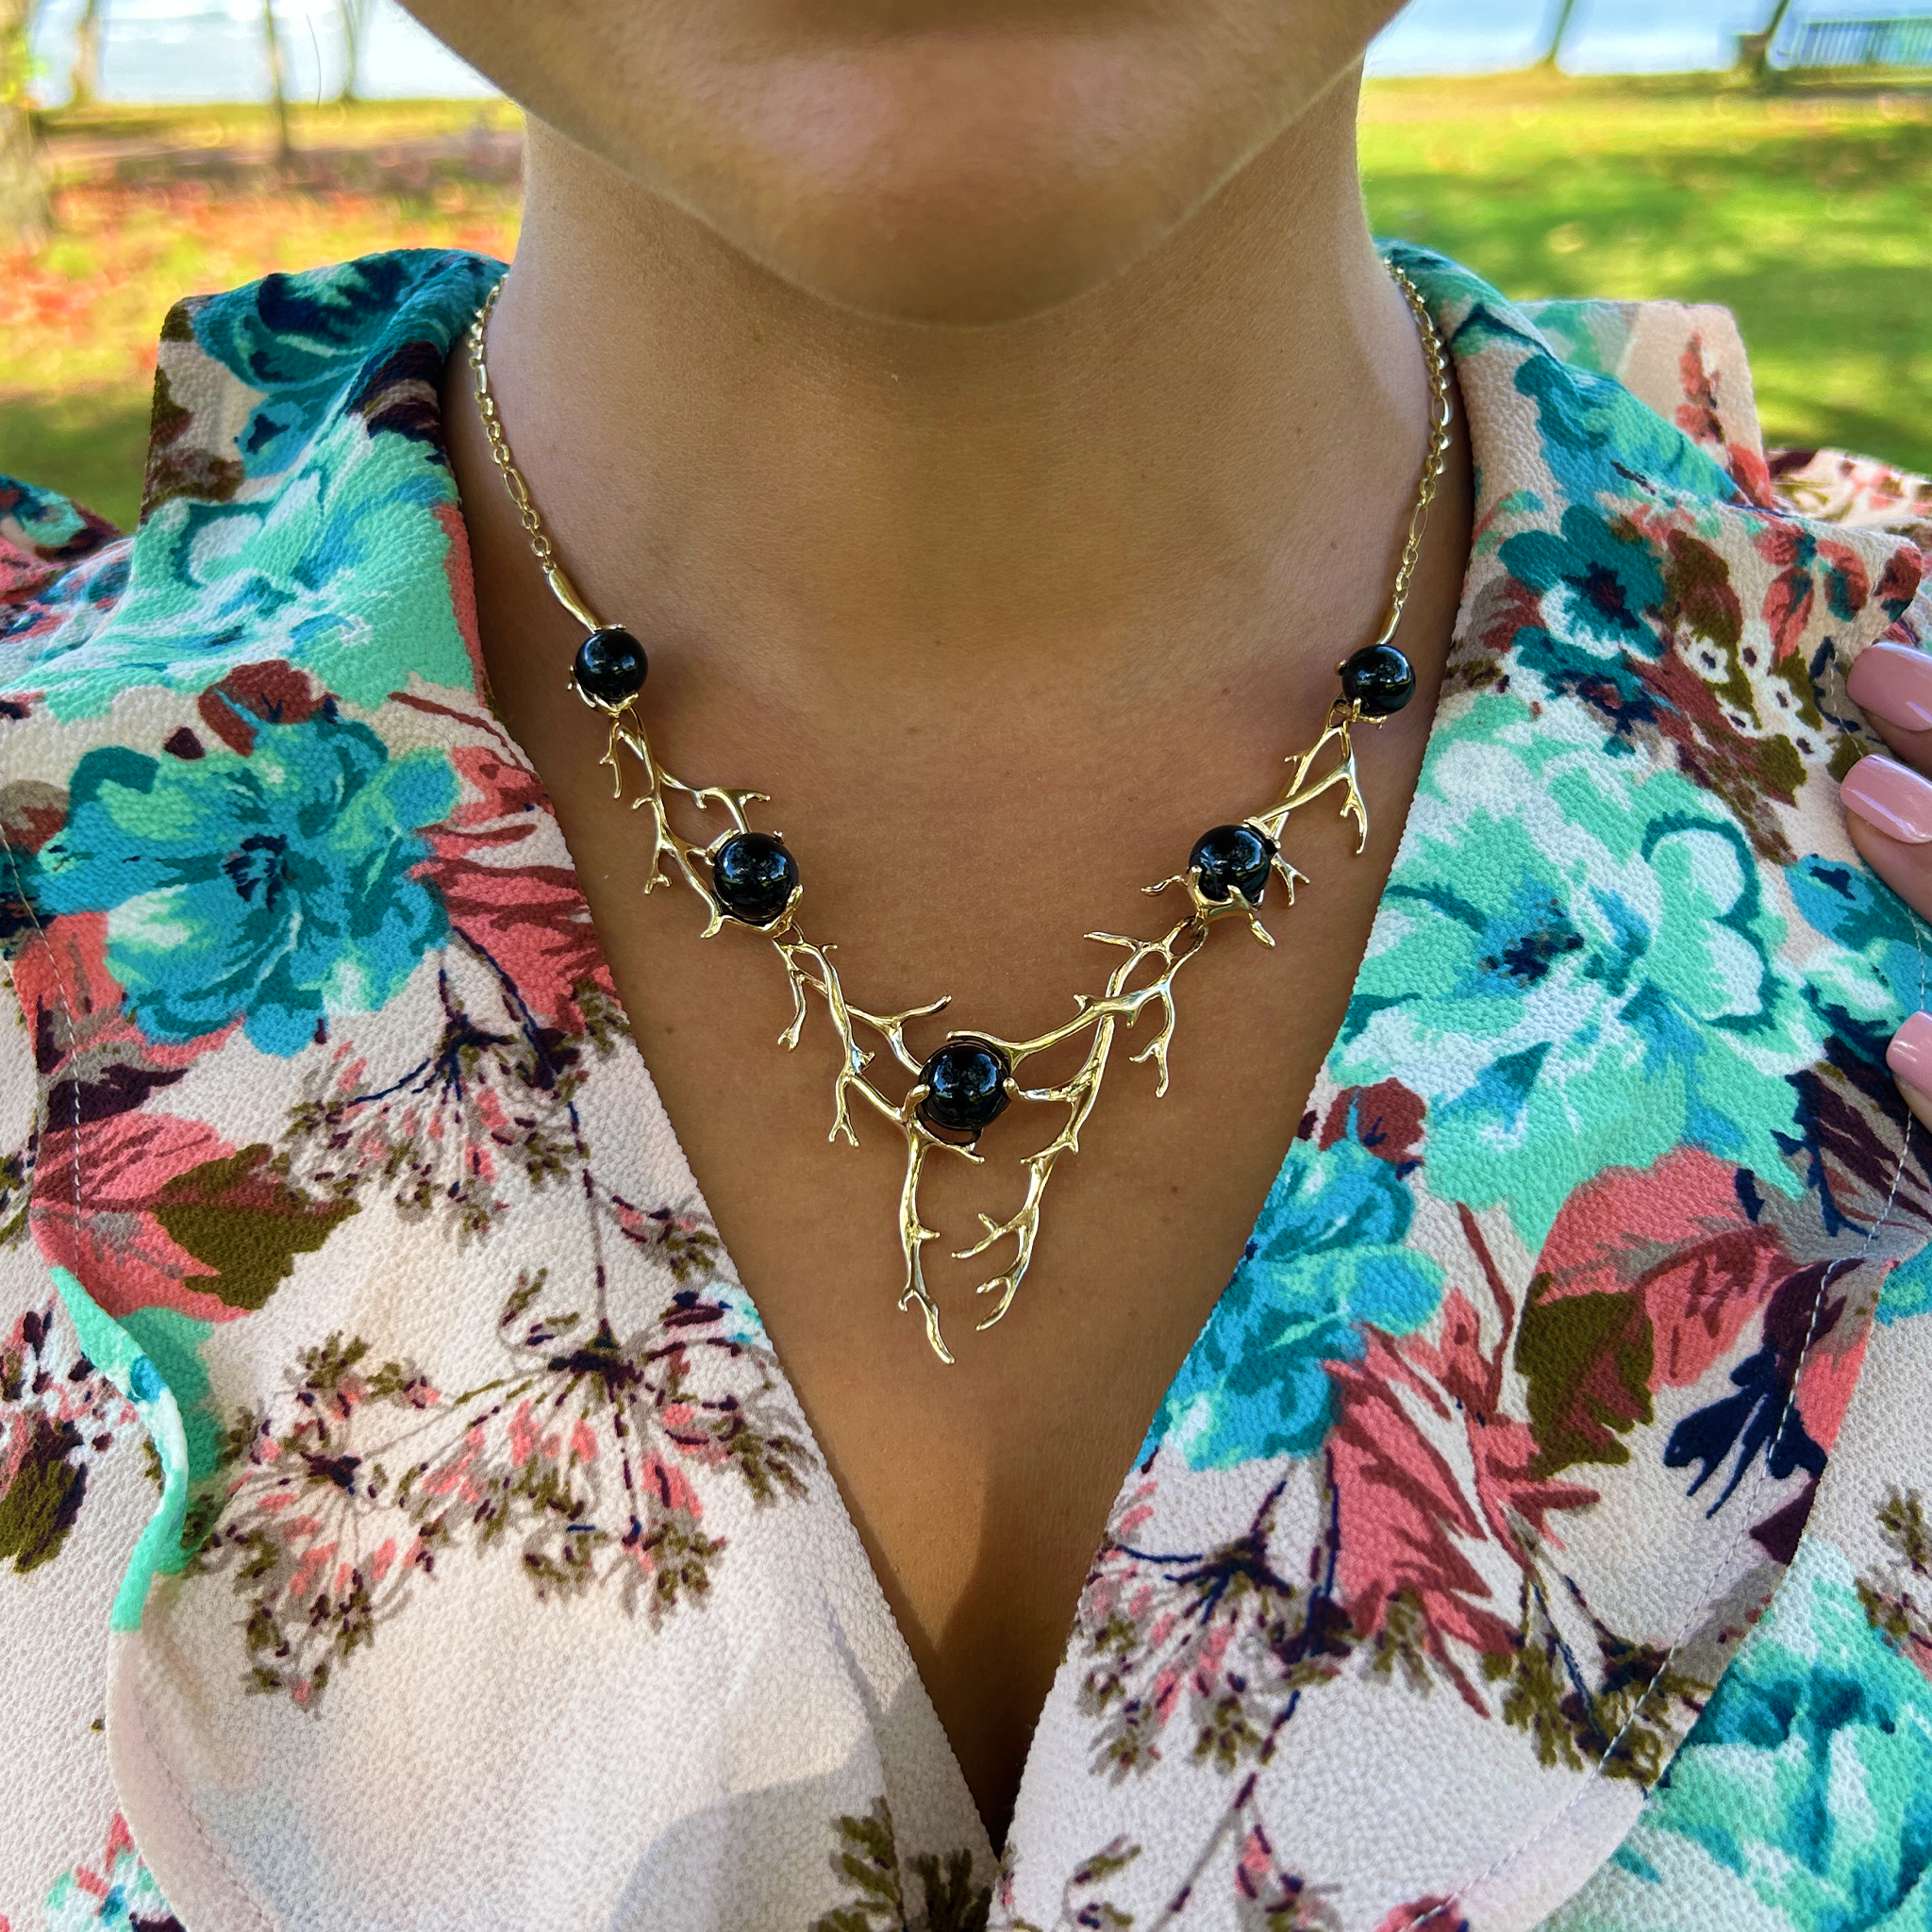 16-18" verstellbare Heritage Black Coral Halskette in Gold